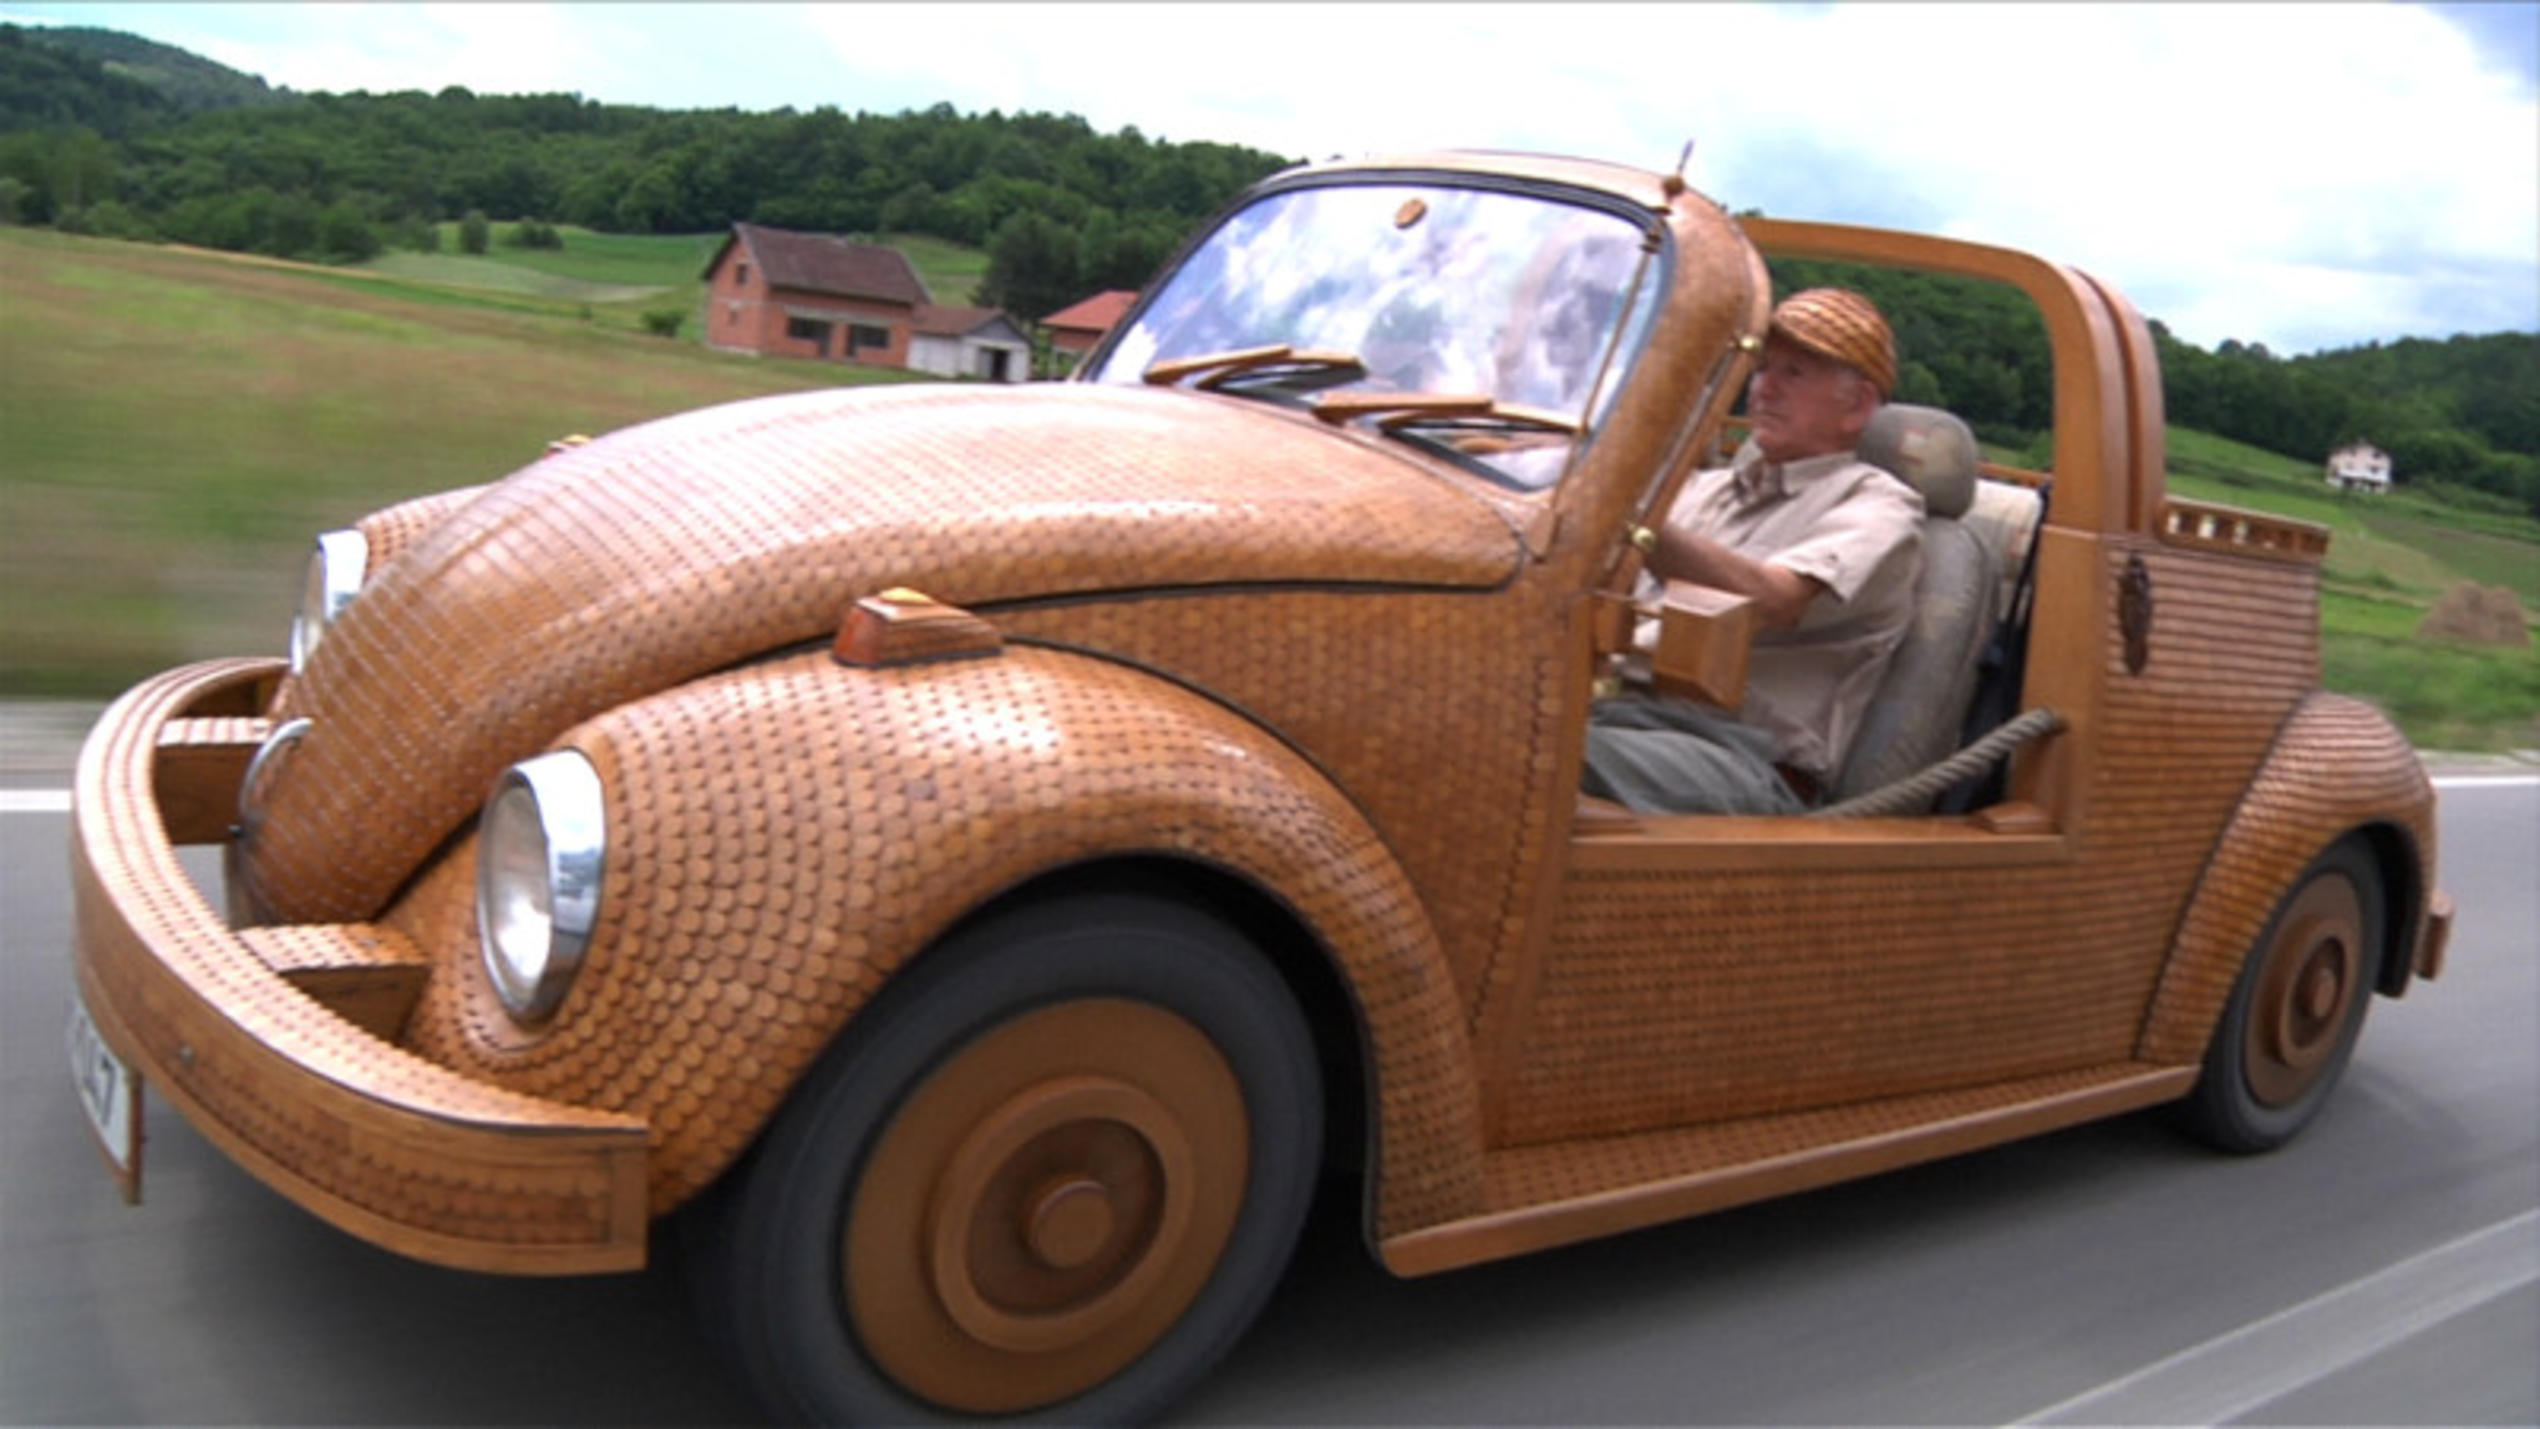 auto mobil zeigt einen echten Holz-Käfer!